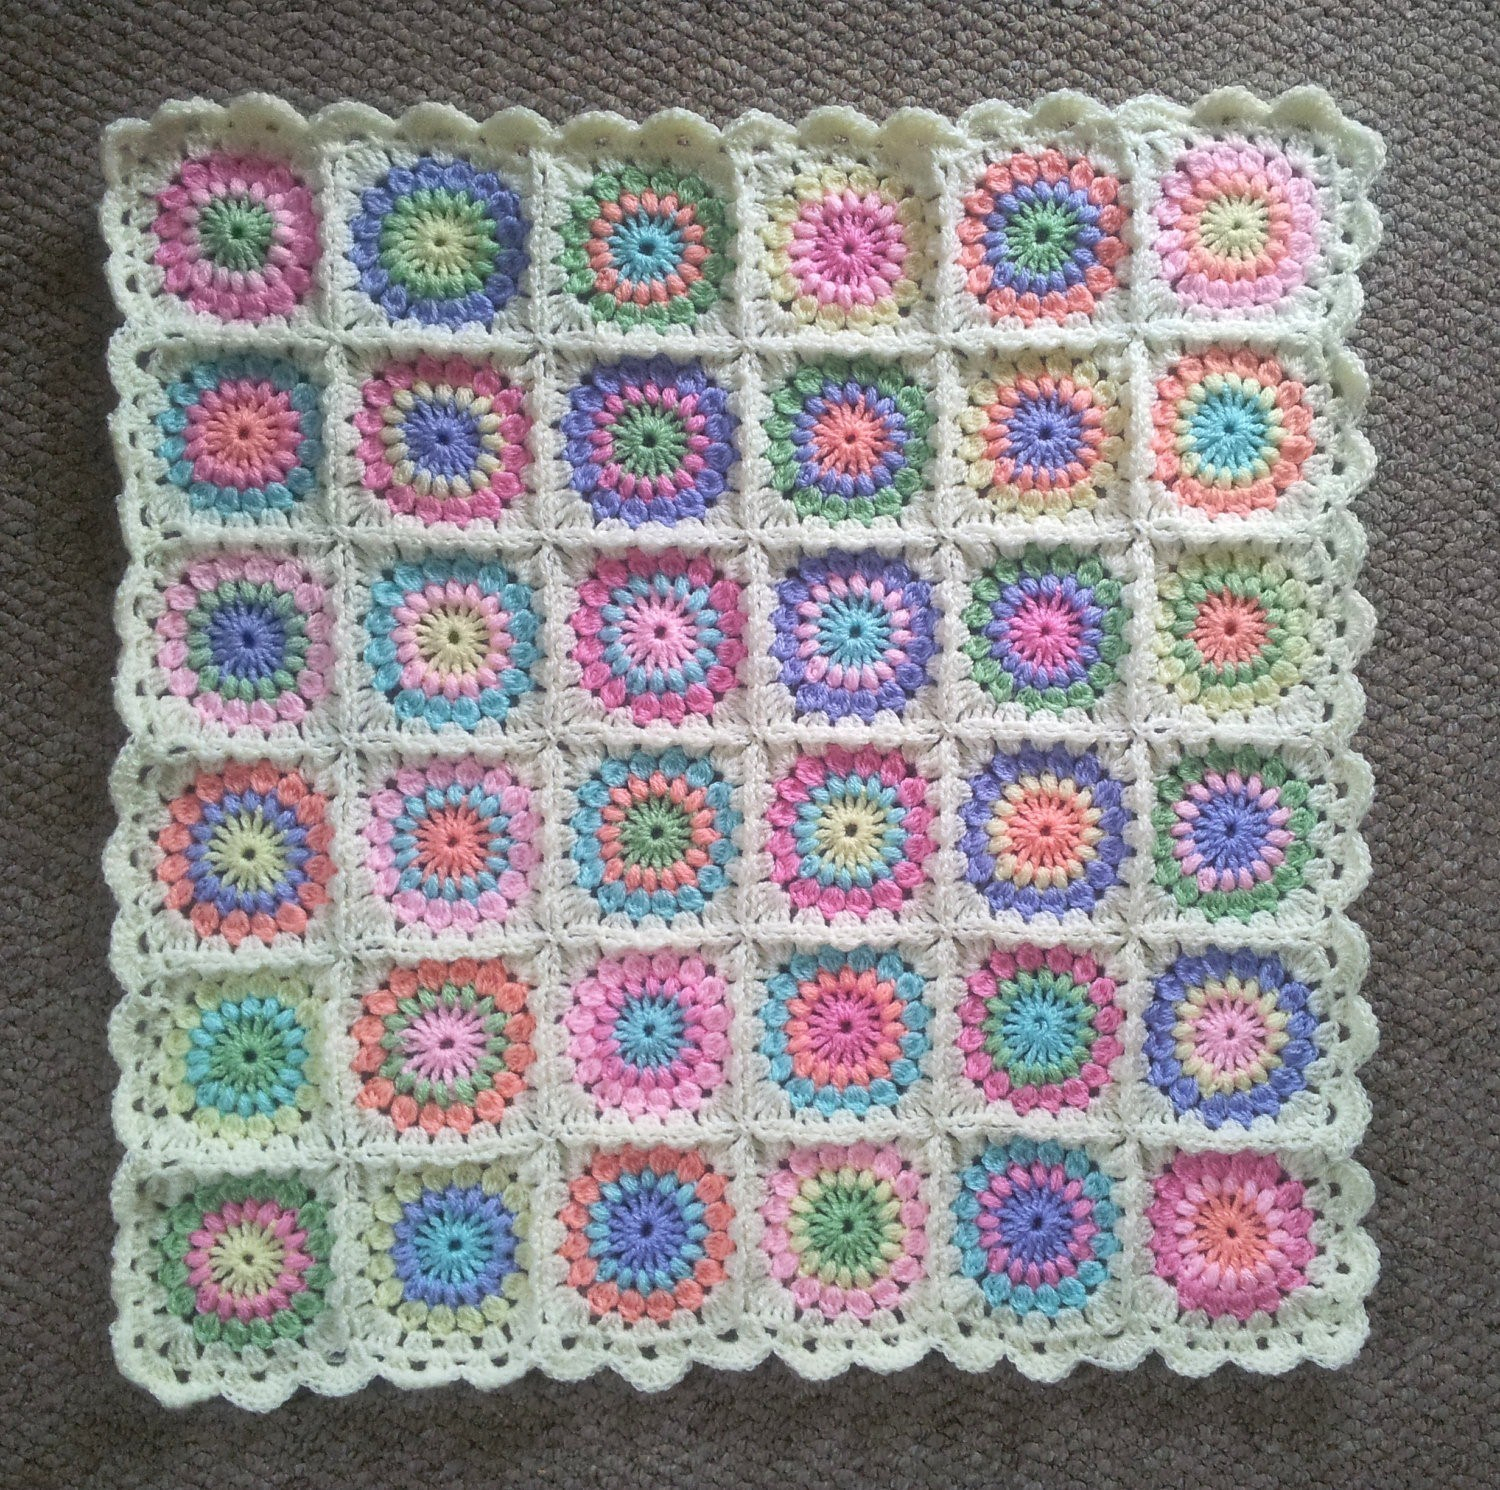 Free Crochet Patterns Baby Blankets Free Crochet Patterns For Ba Blankets Easy My Flower Blanket